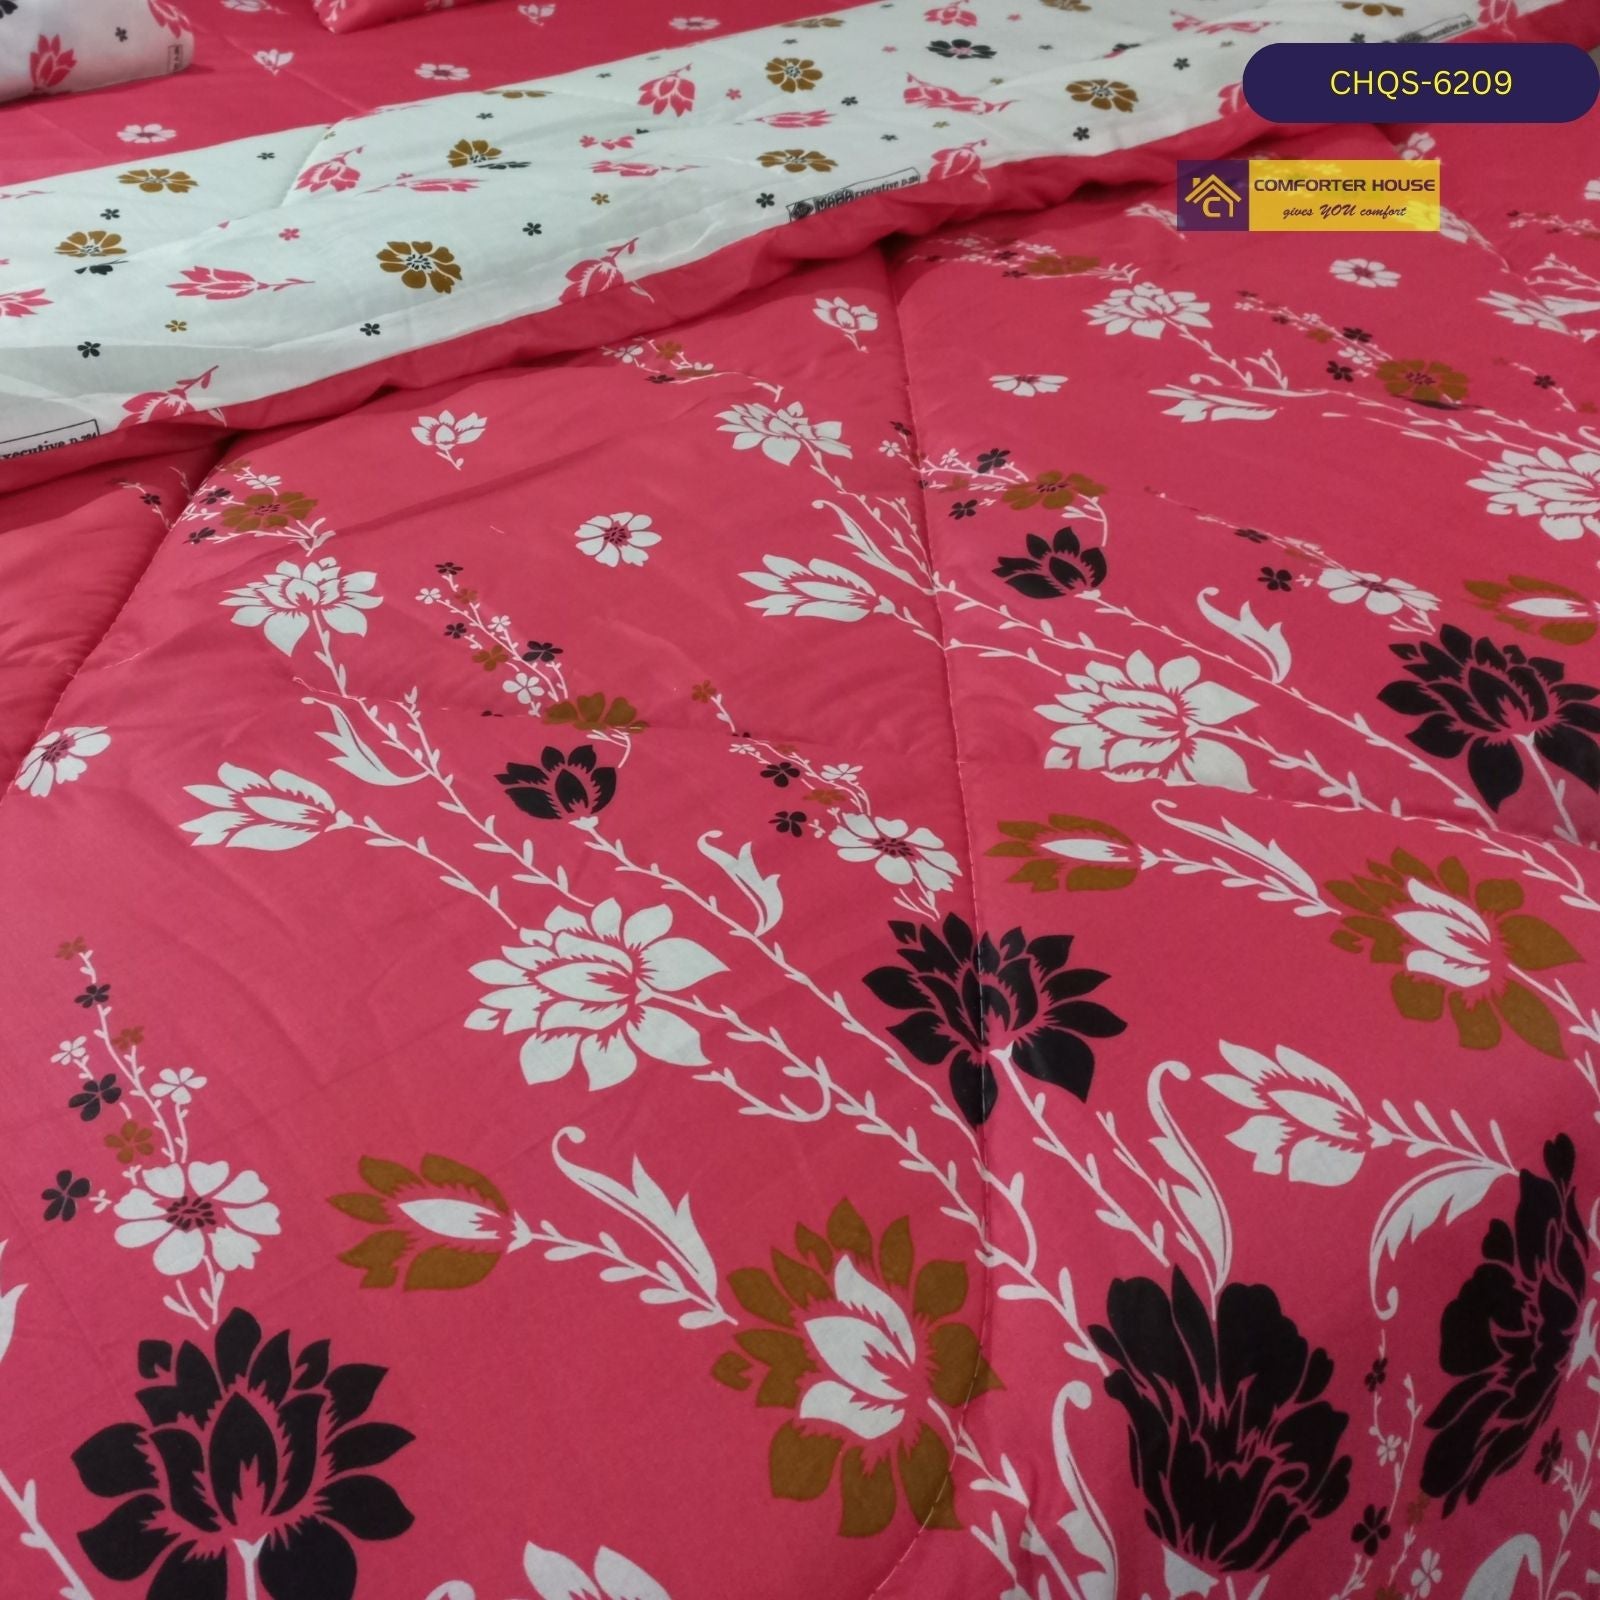 6 Pcs Vicky Razai Set | Mix Cotton | Double Bed | King Size | CHQS-6209 | Comforter House